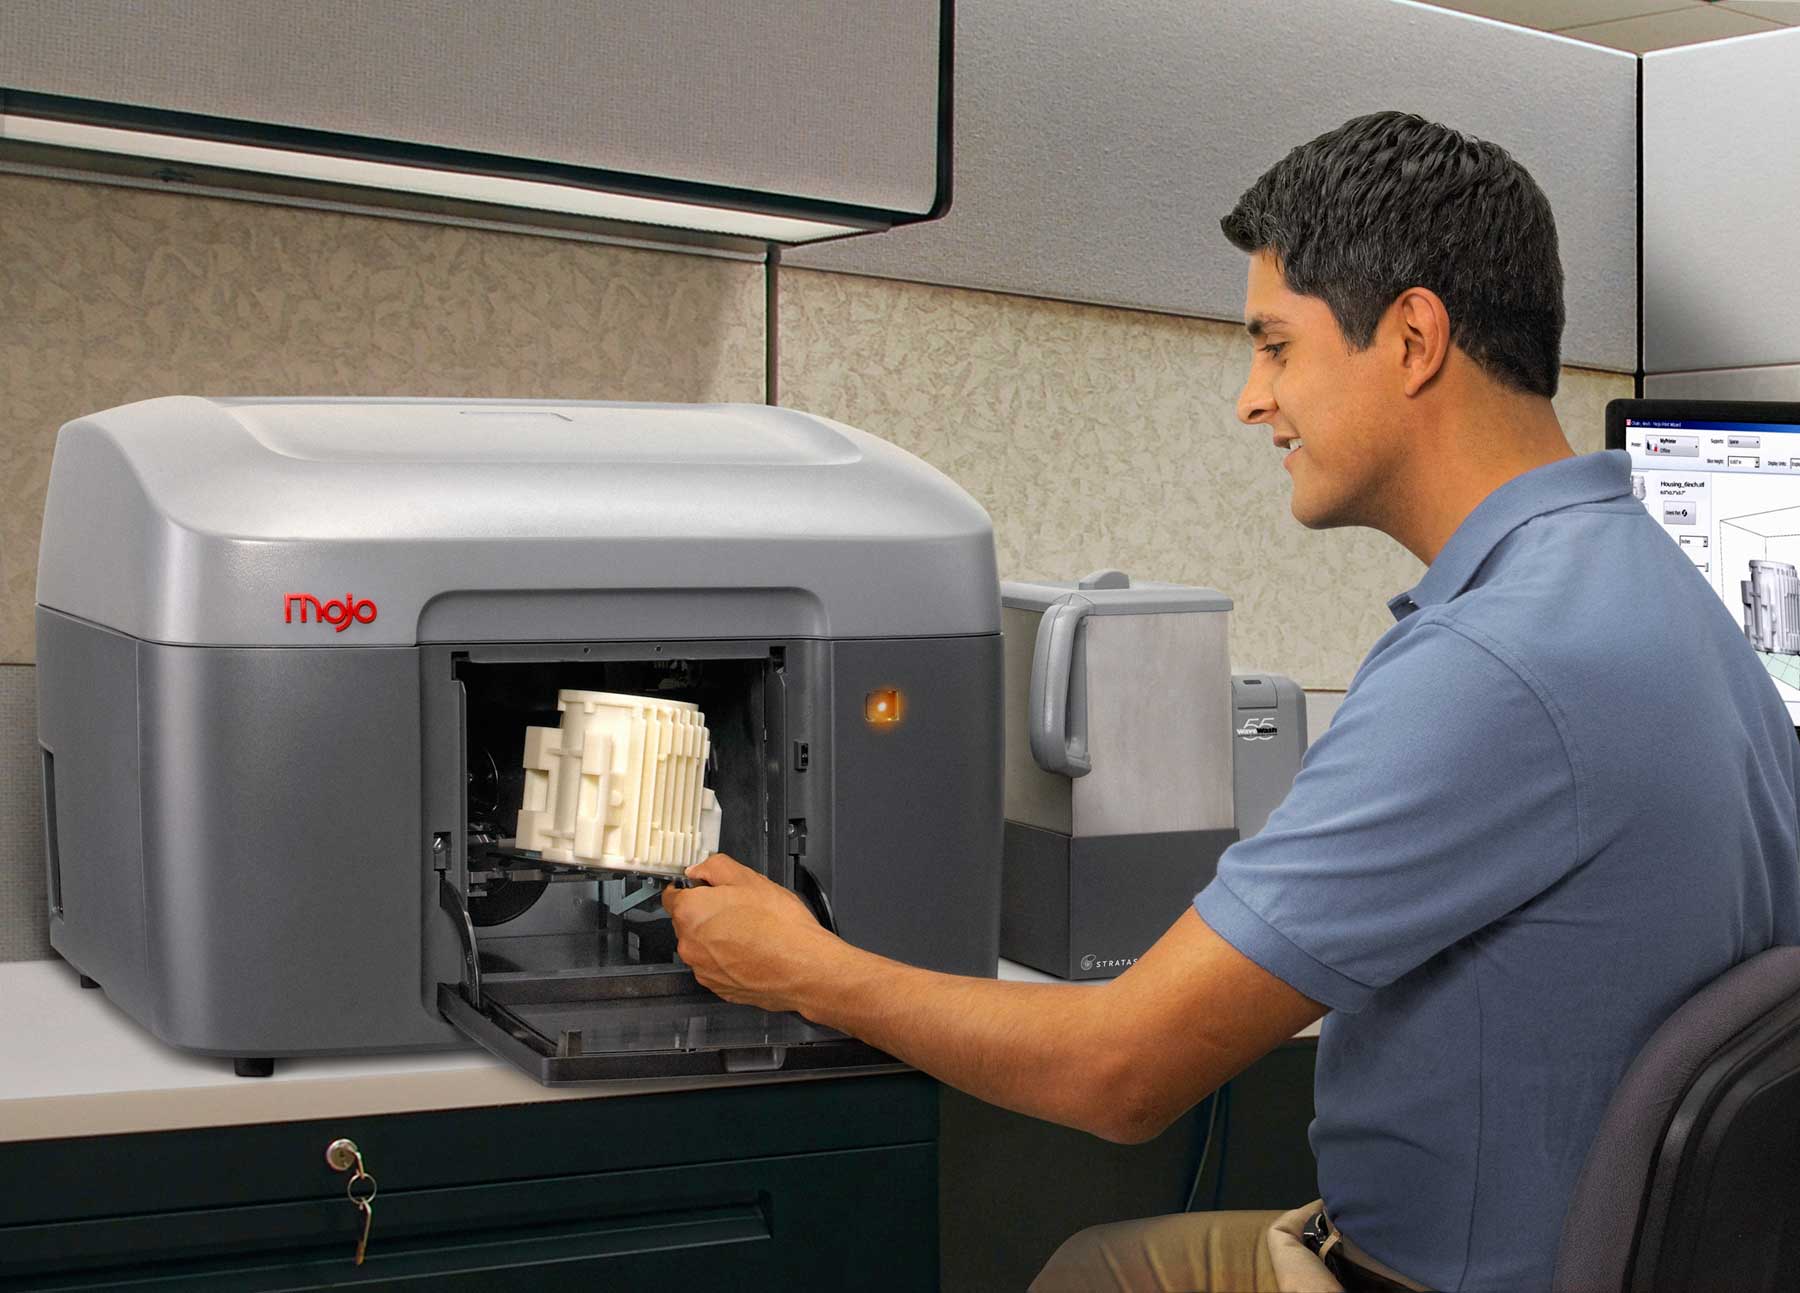 Mojo-3D-printer Engineer-removing-part Introduces Desktop Professional 3D Printer Mojo Make Parts Fast.jpg